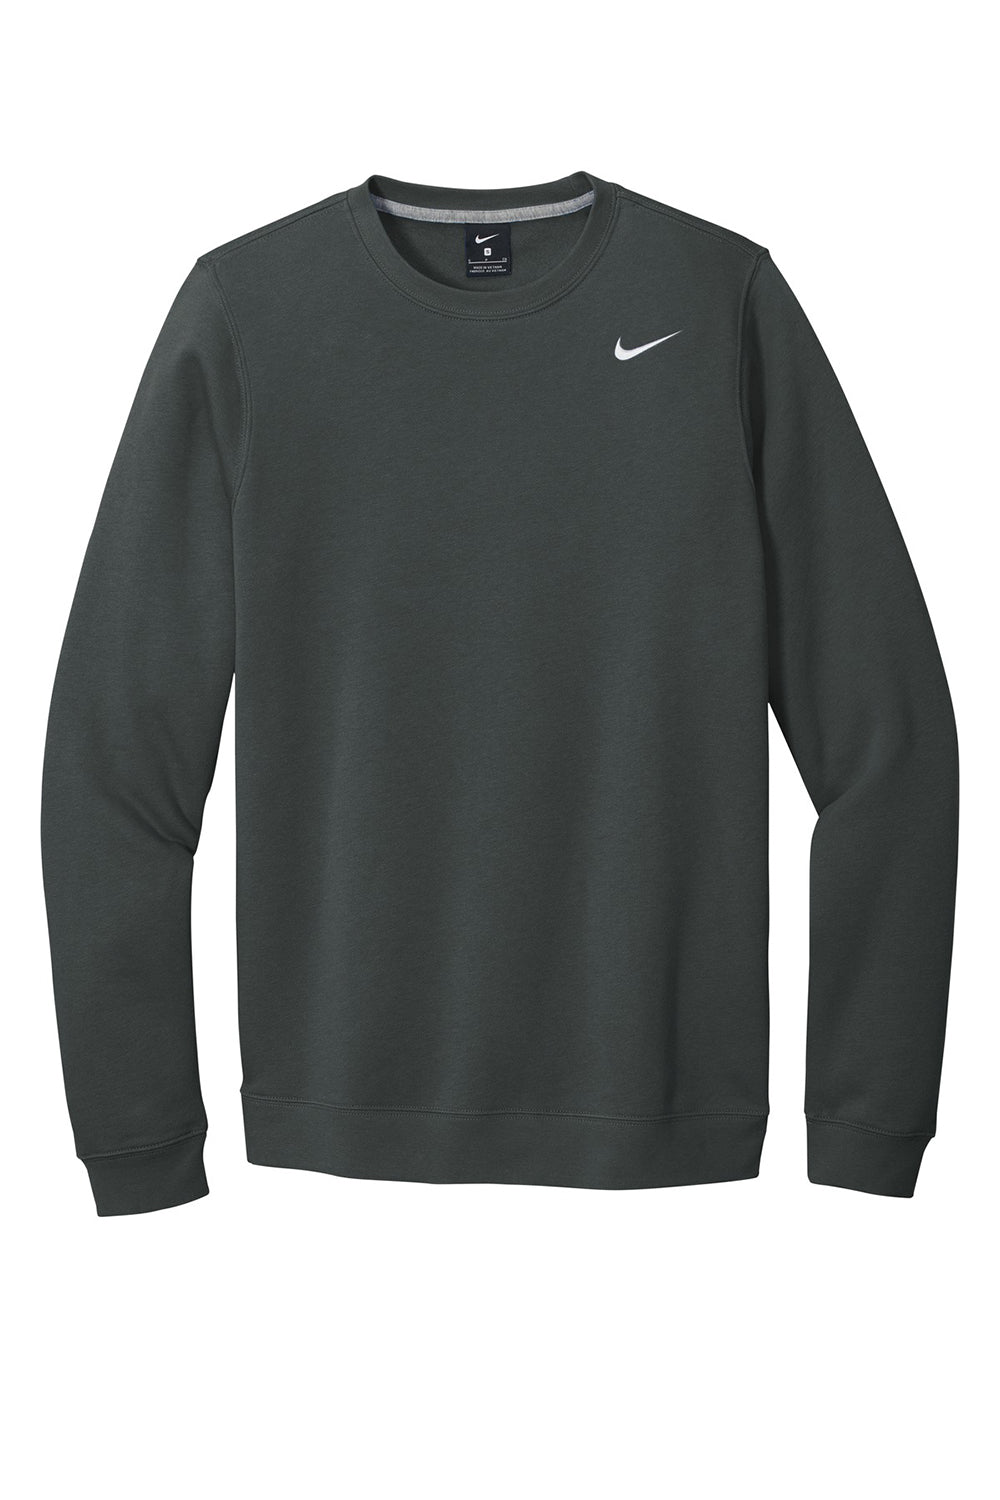 Nike CJ1614 Mens Club Fleece Crewneck Sweatshirt Anthracite Grey Flat Front